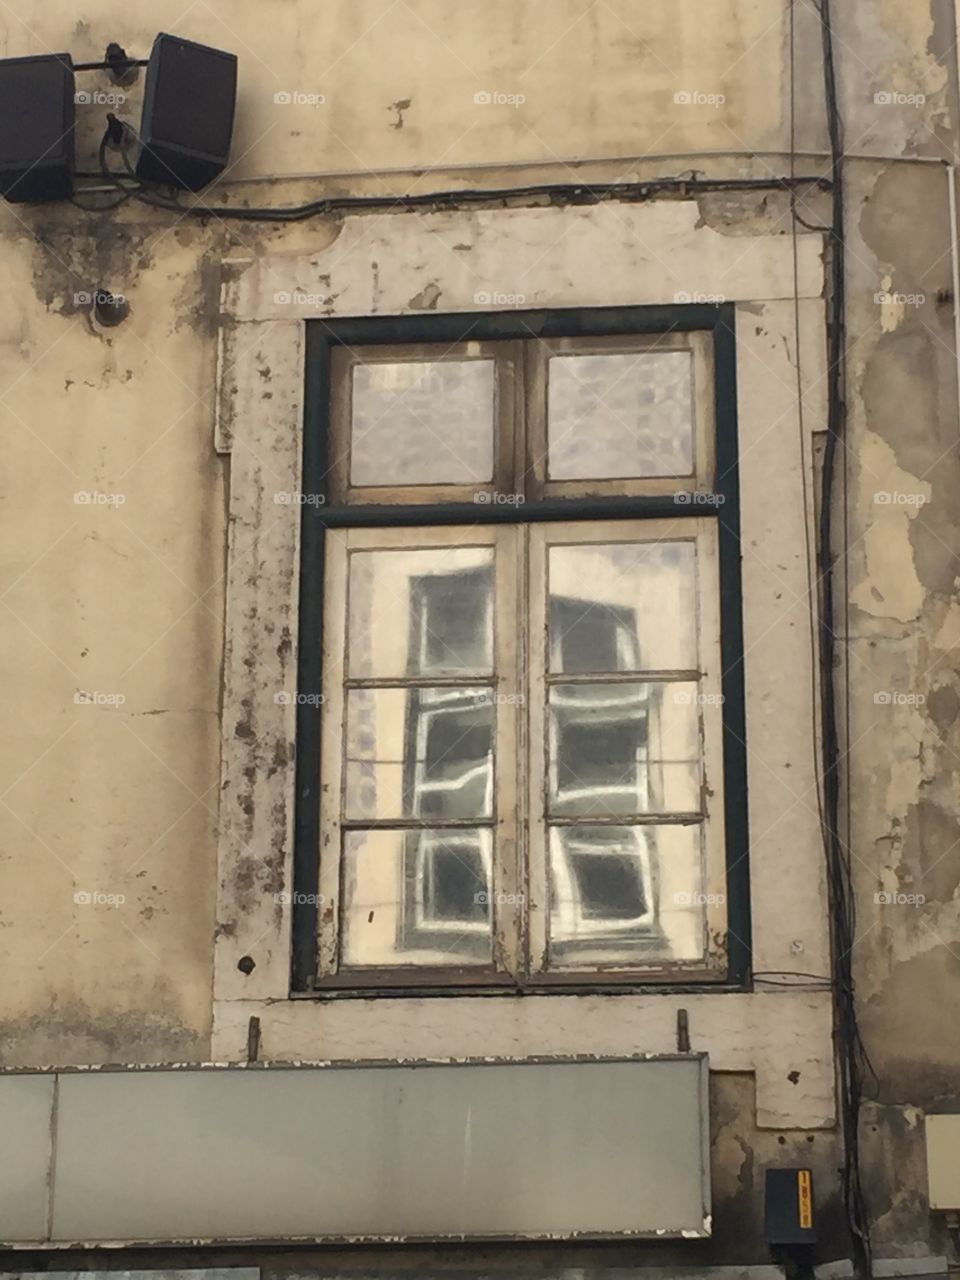 View of a window in a window 